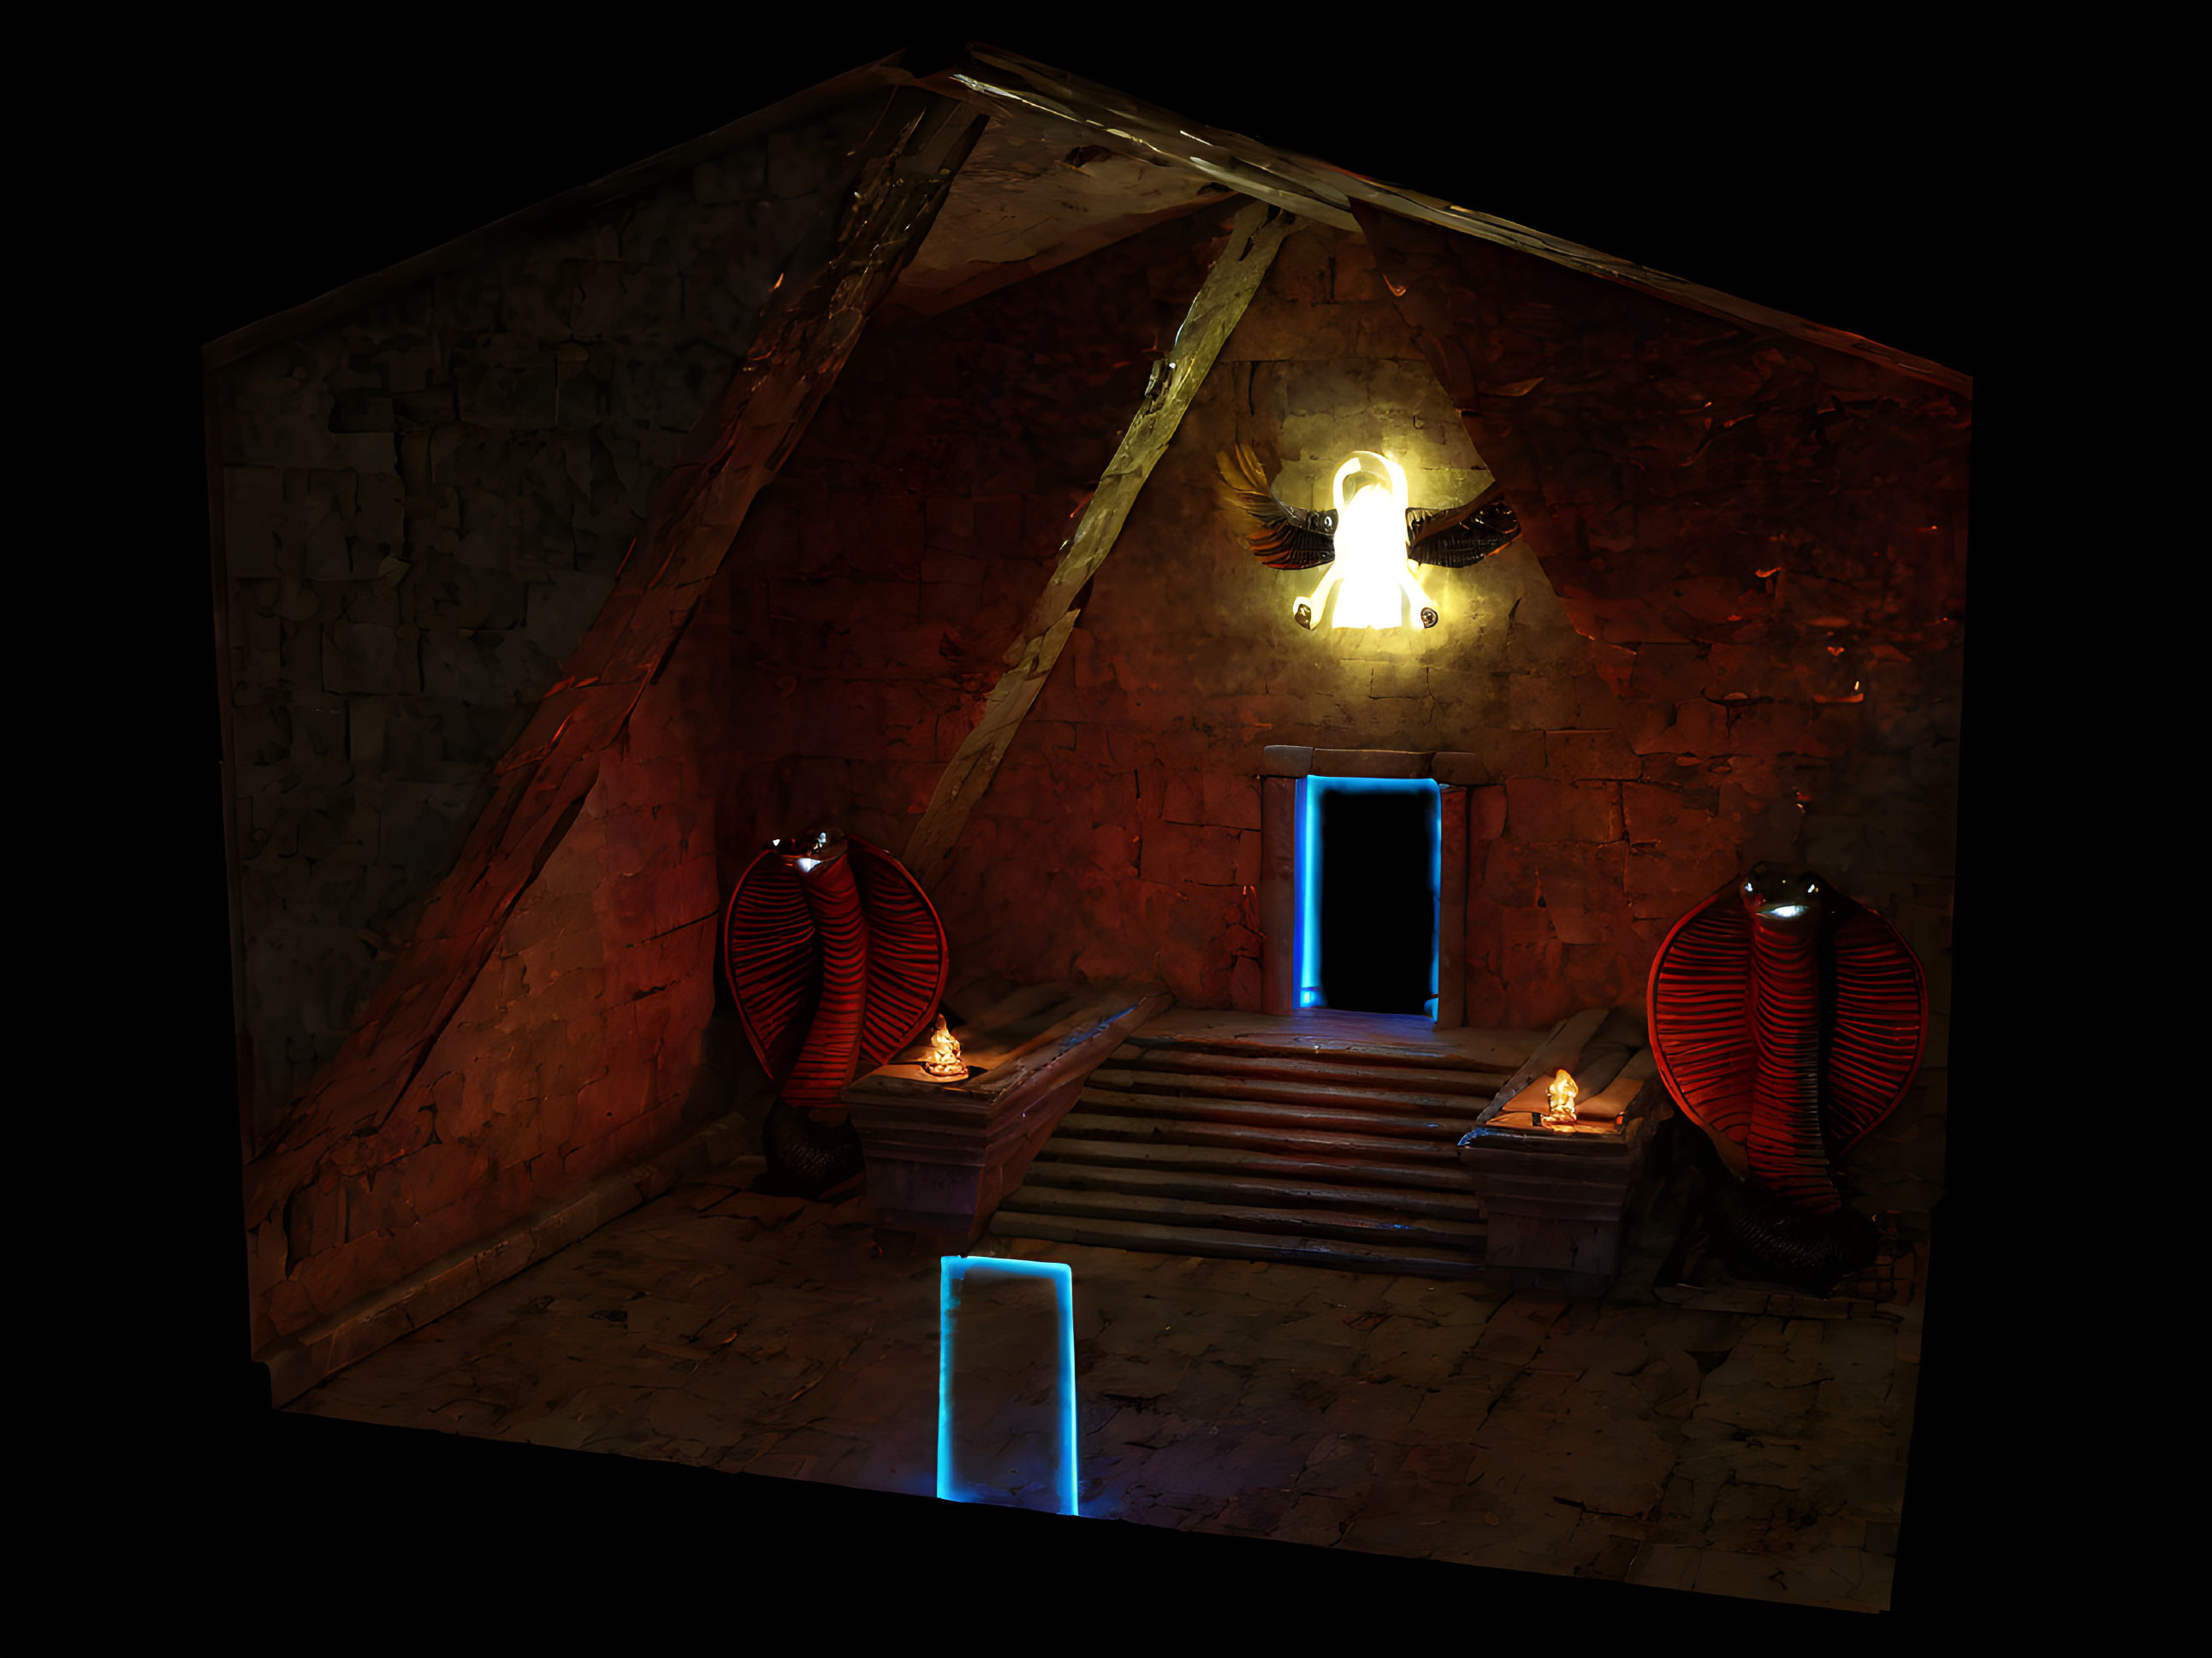 Eerie attic room with glowing symbols, red sarcophagi, angelic figure, blue doorway